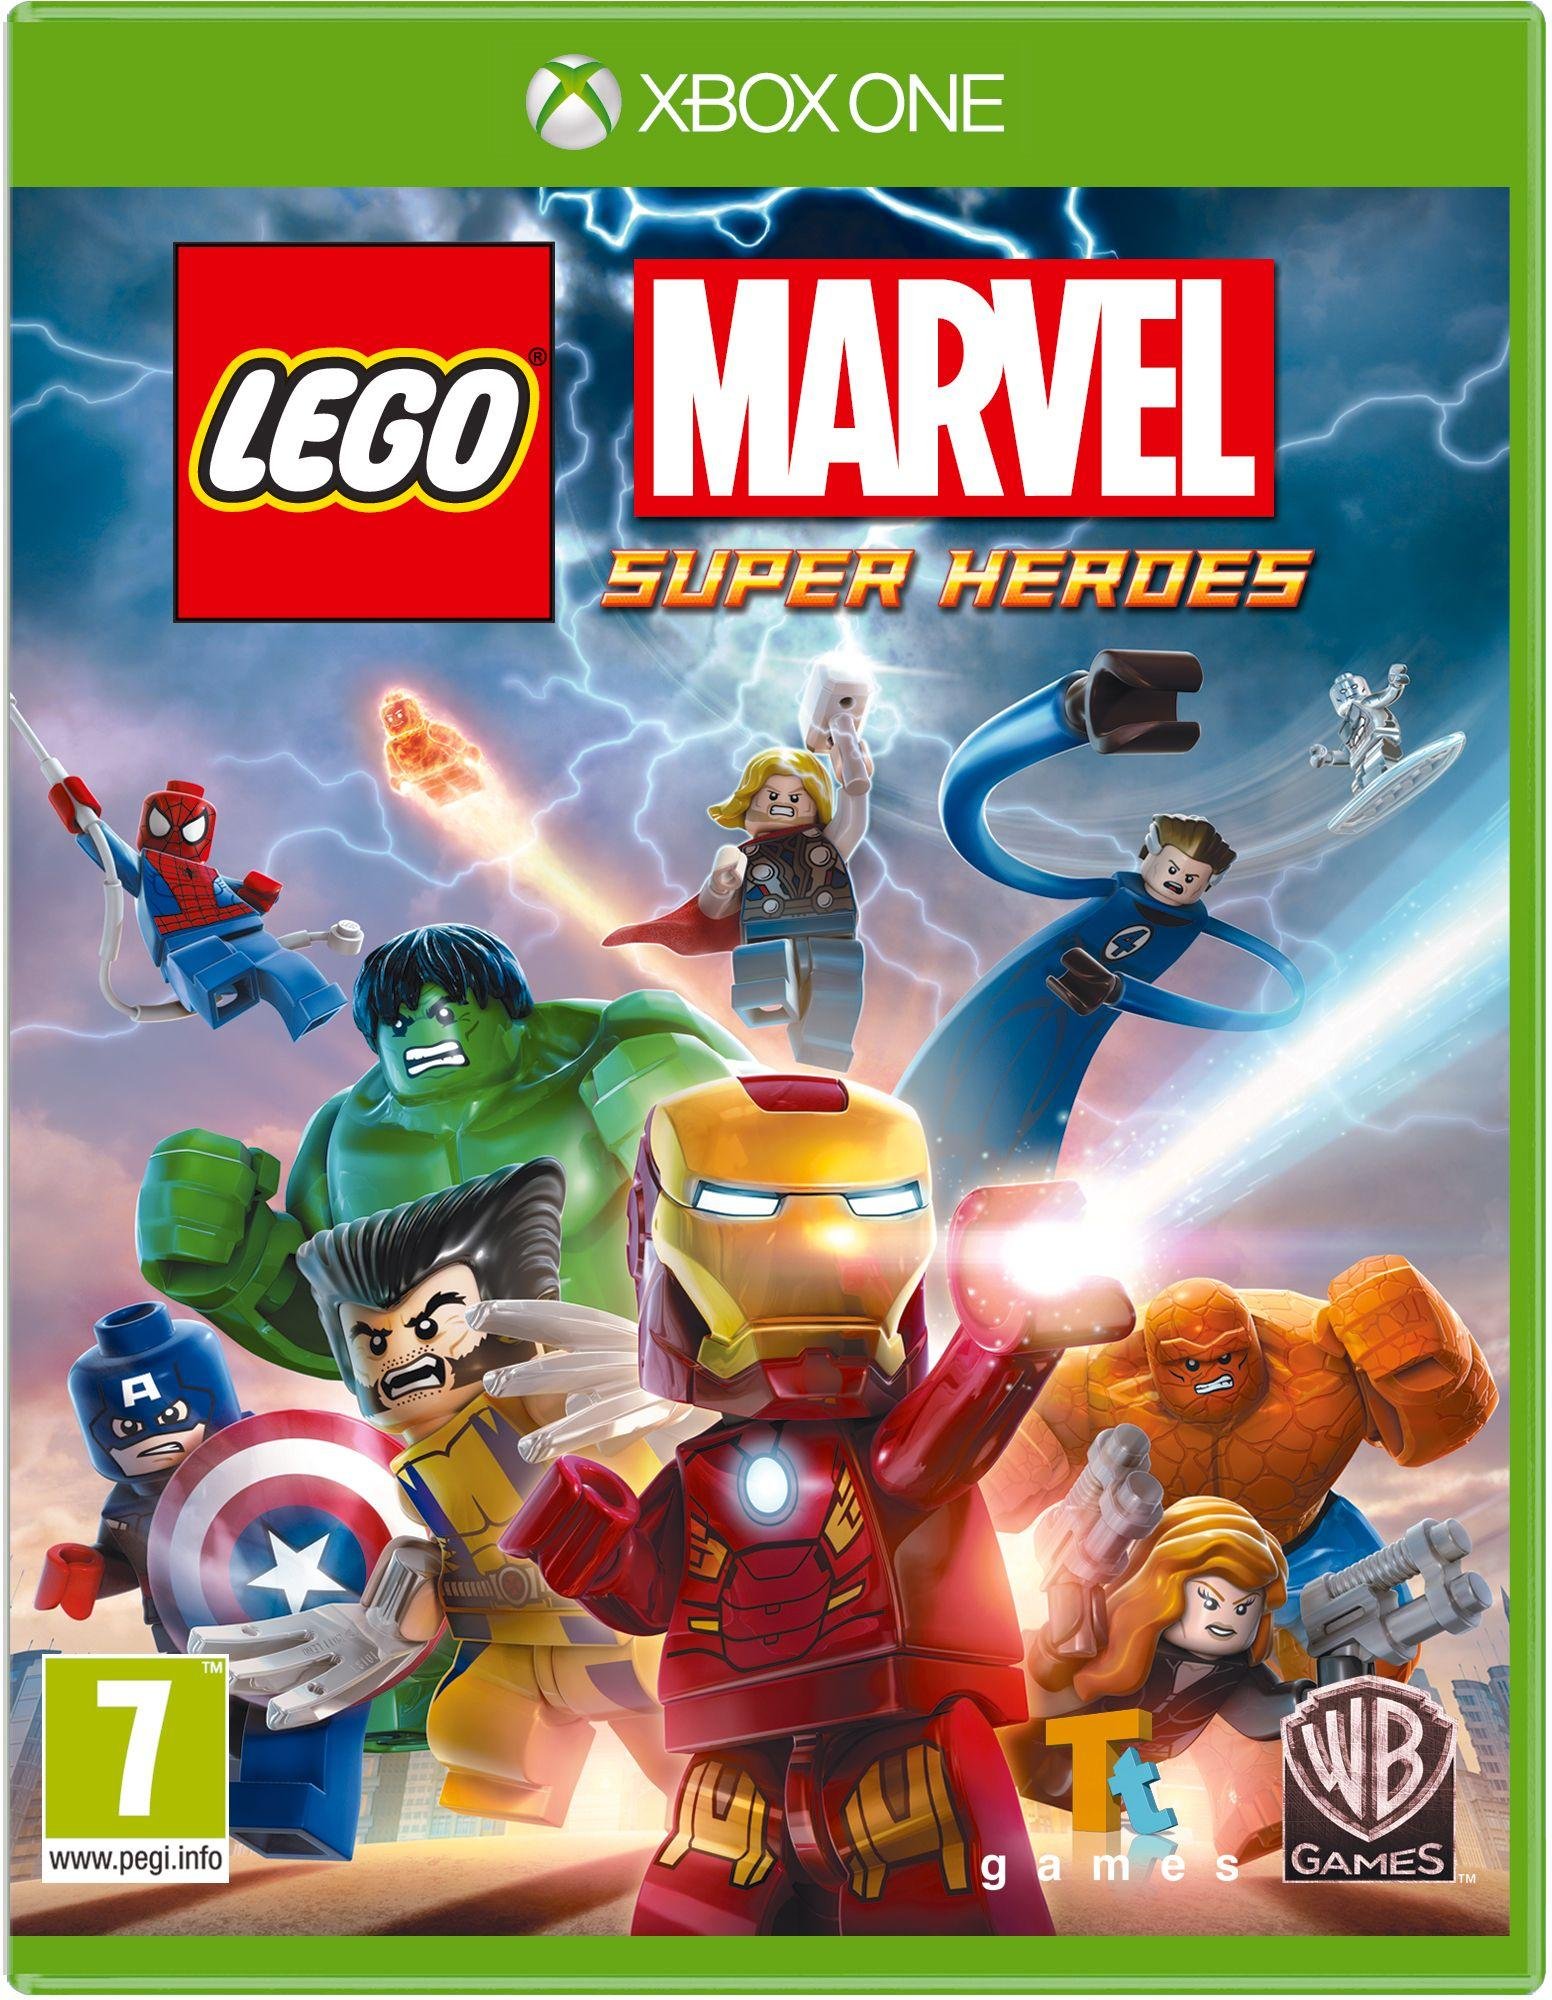 LEGO Marvel Super Heroes Xbox One Game